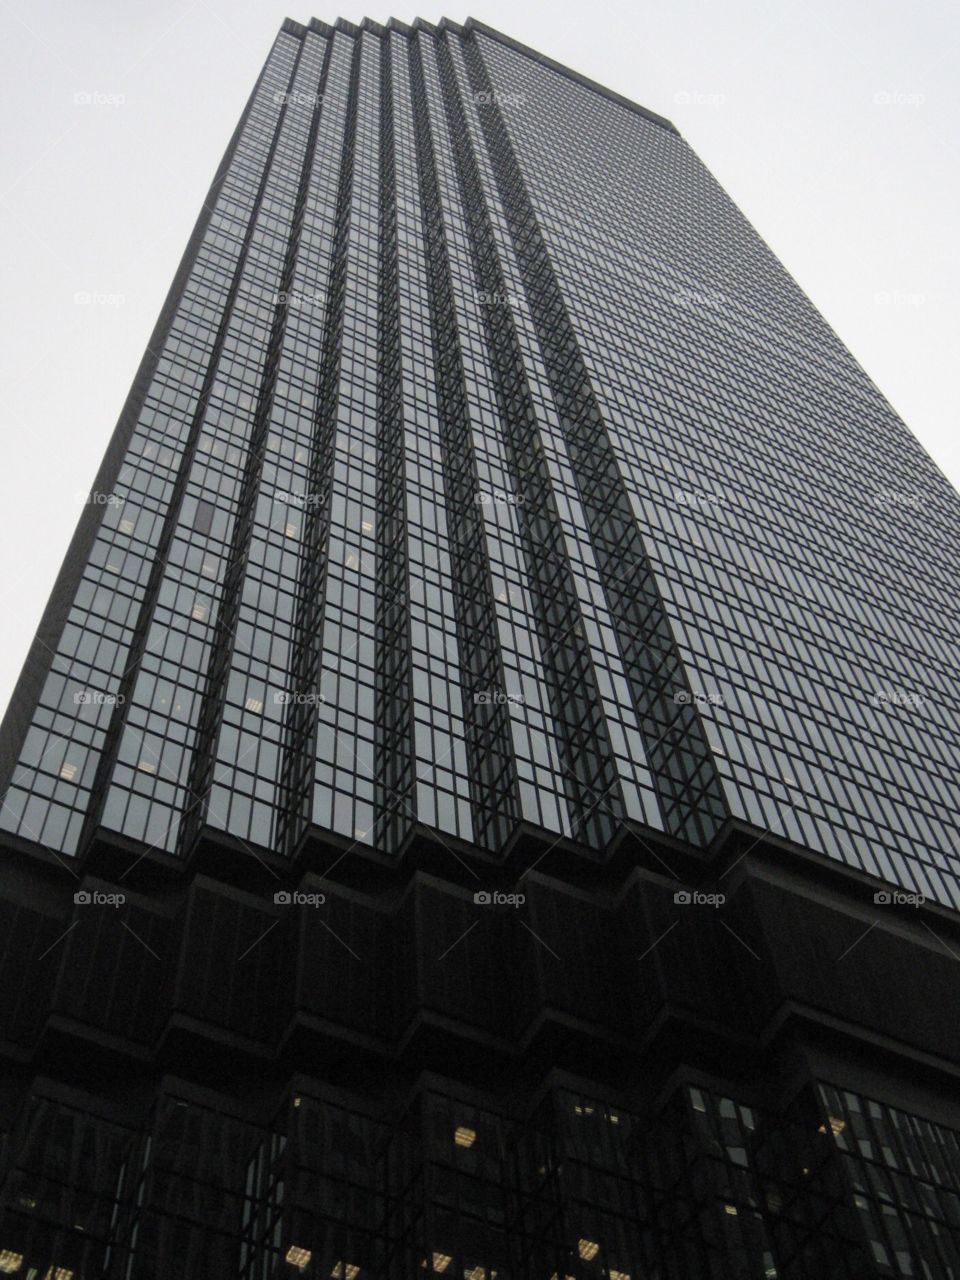 Building in downtown Minneapolis, Minnesota